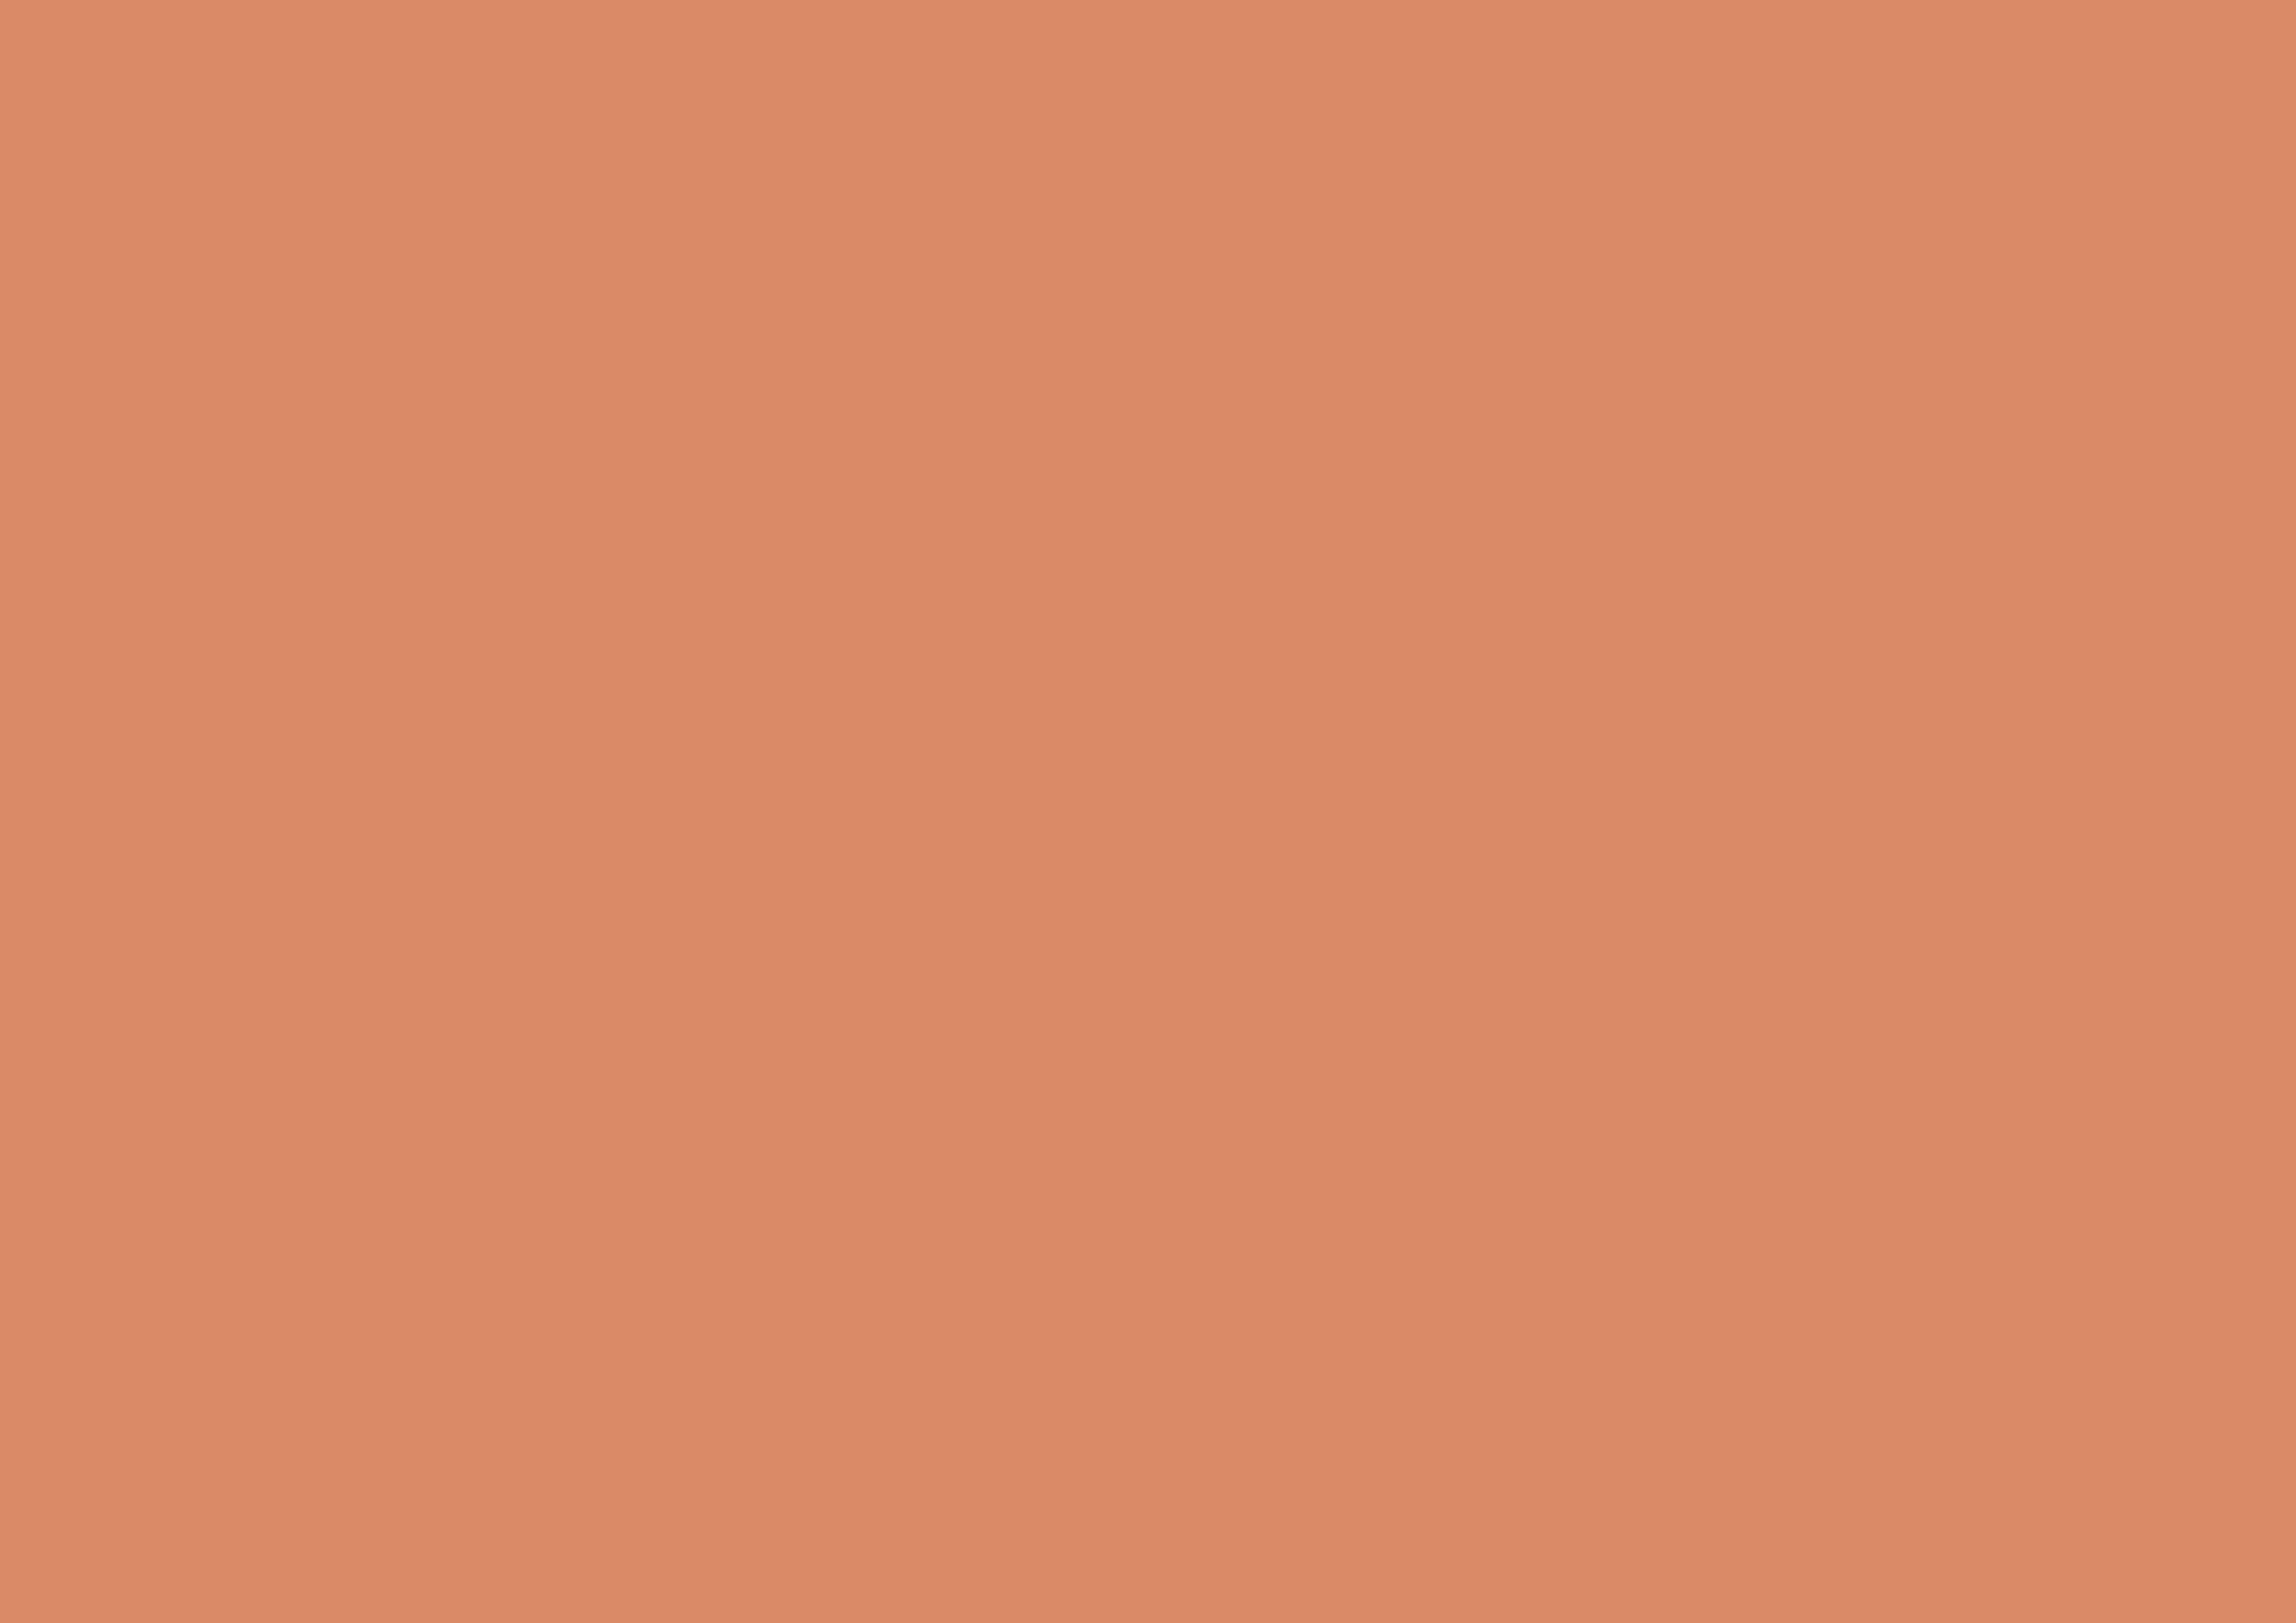 3508x2480 Copper Crayola Solid Color Background